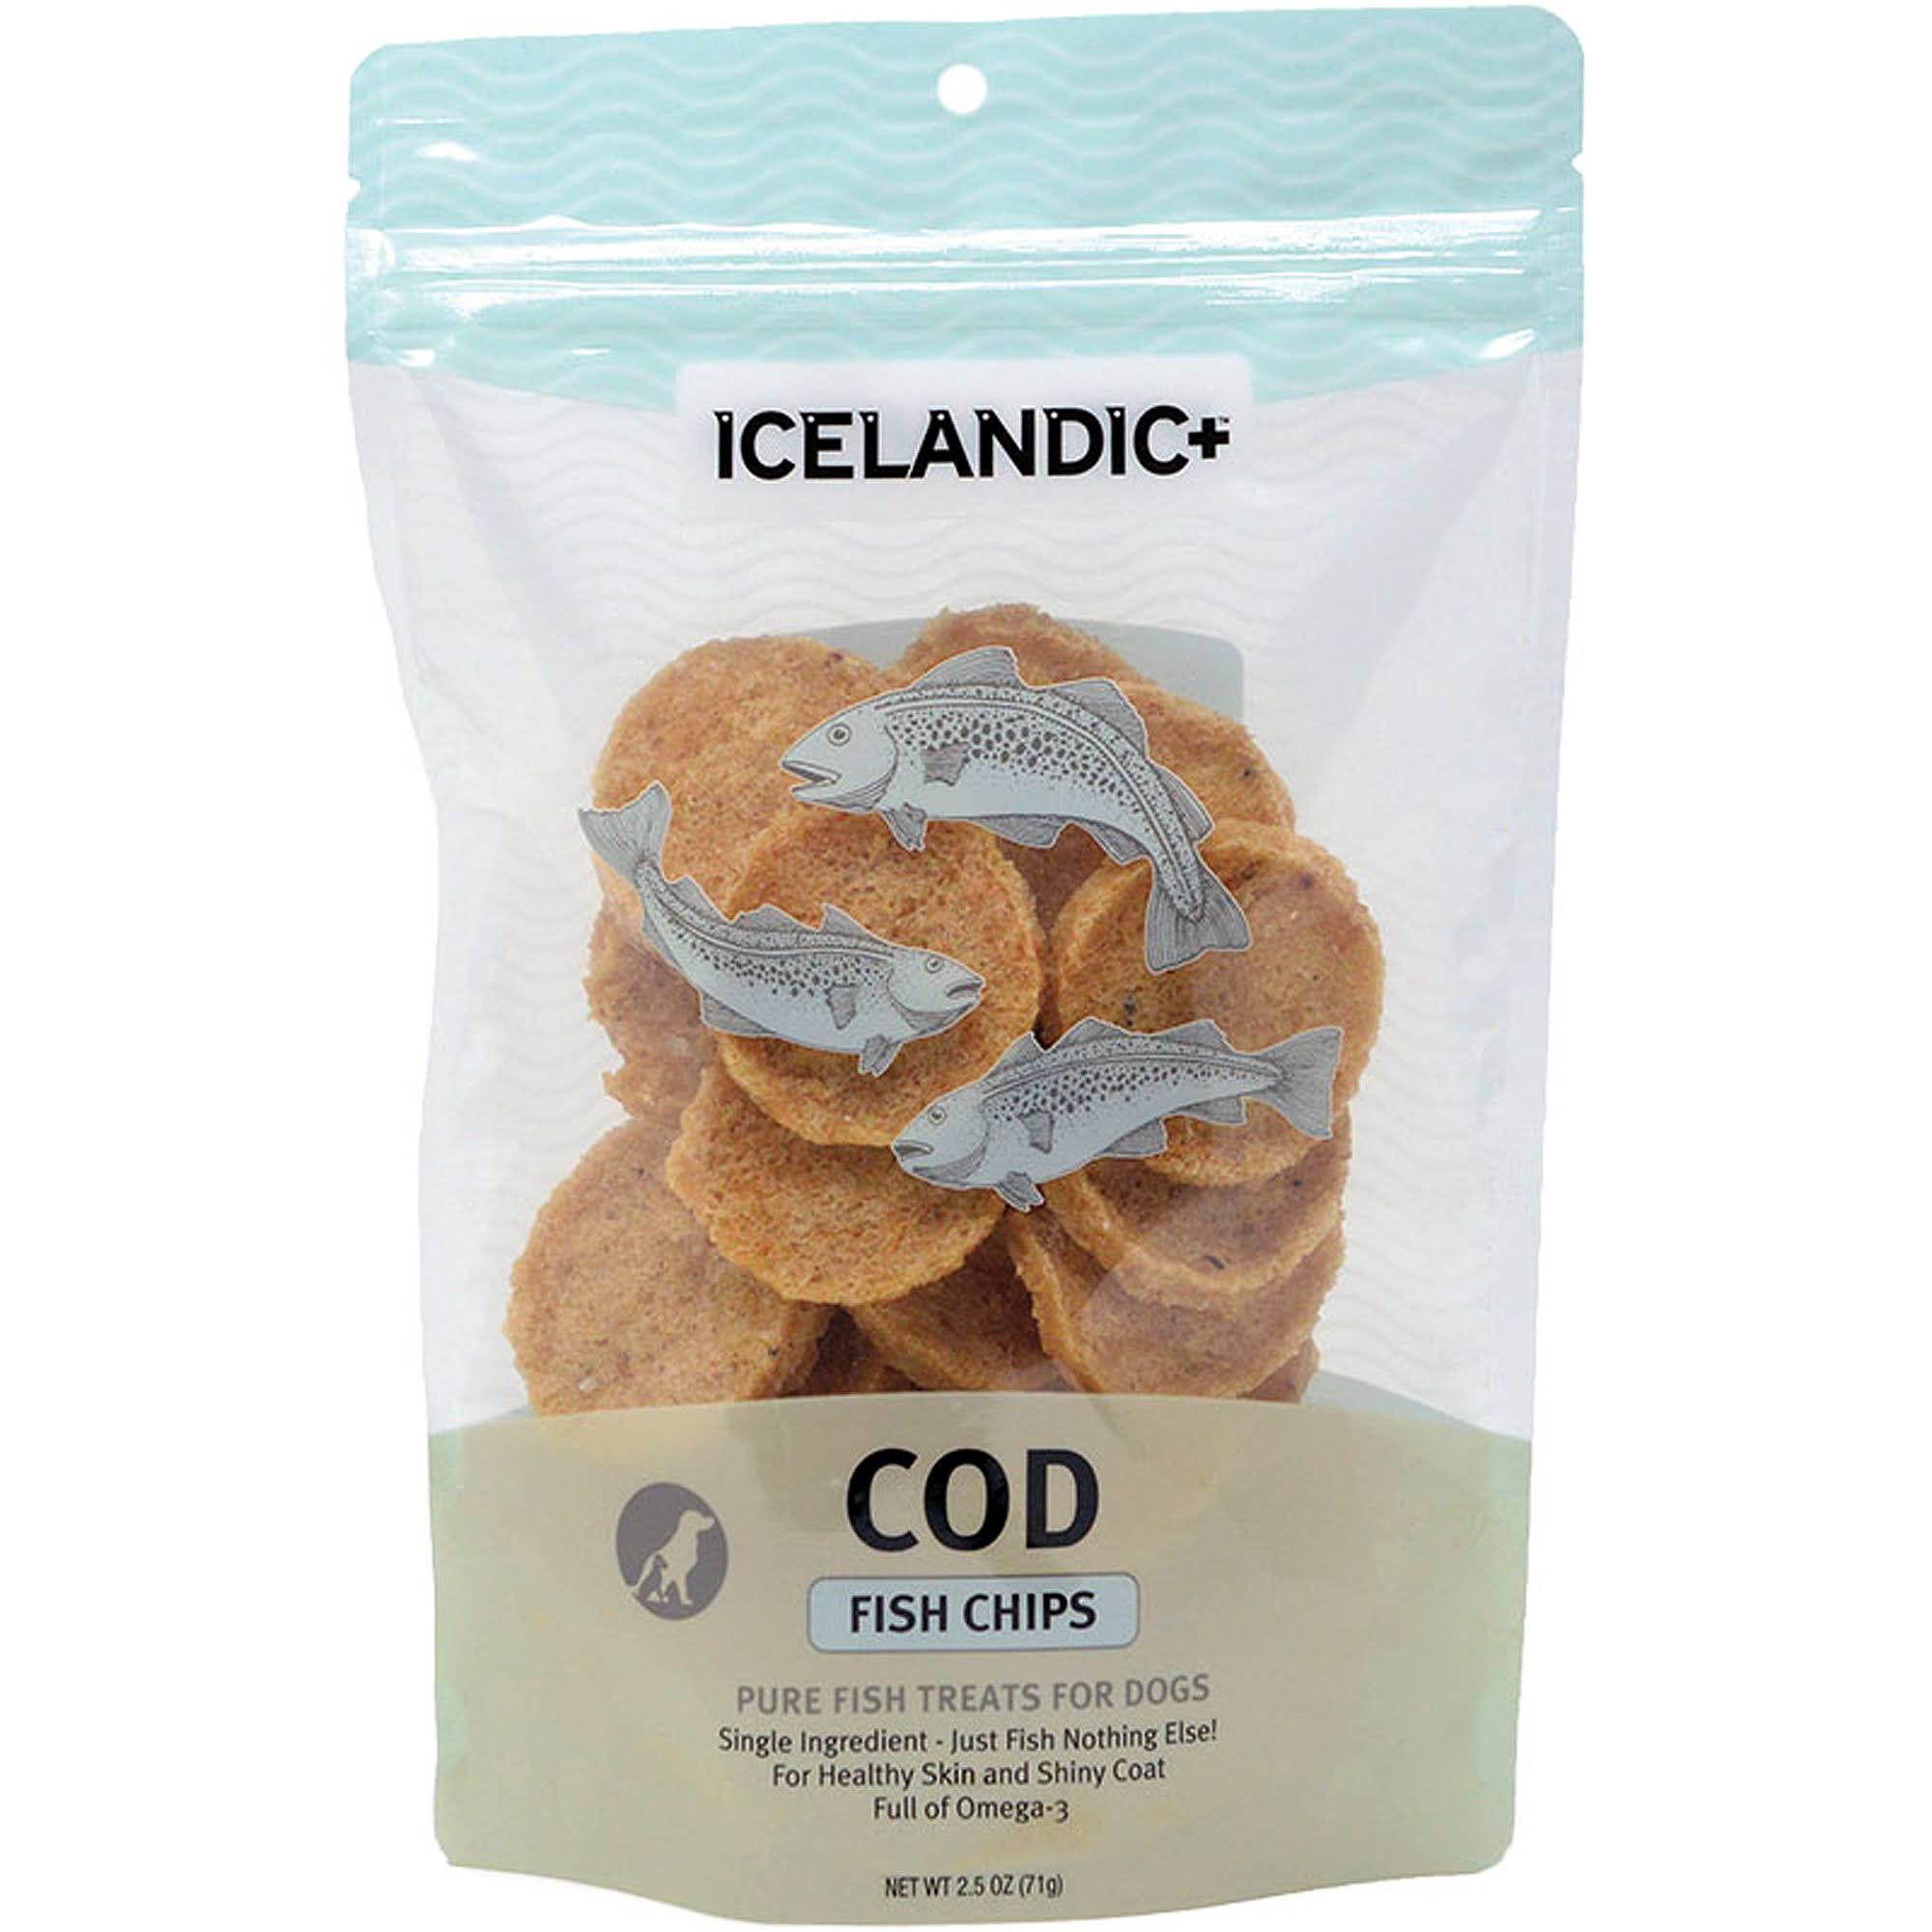 Icelandic+ Cod Fish Chips Dog Treats - 2.5 oz